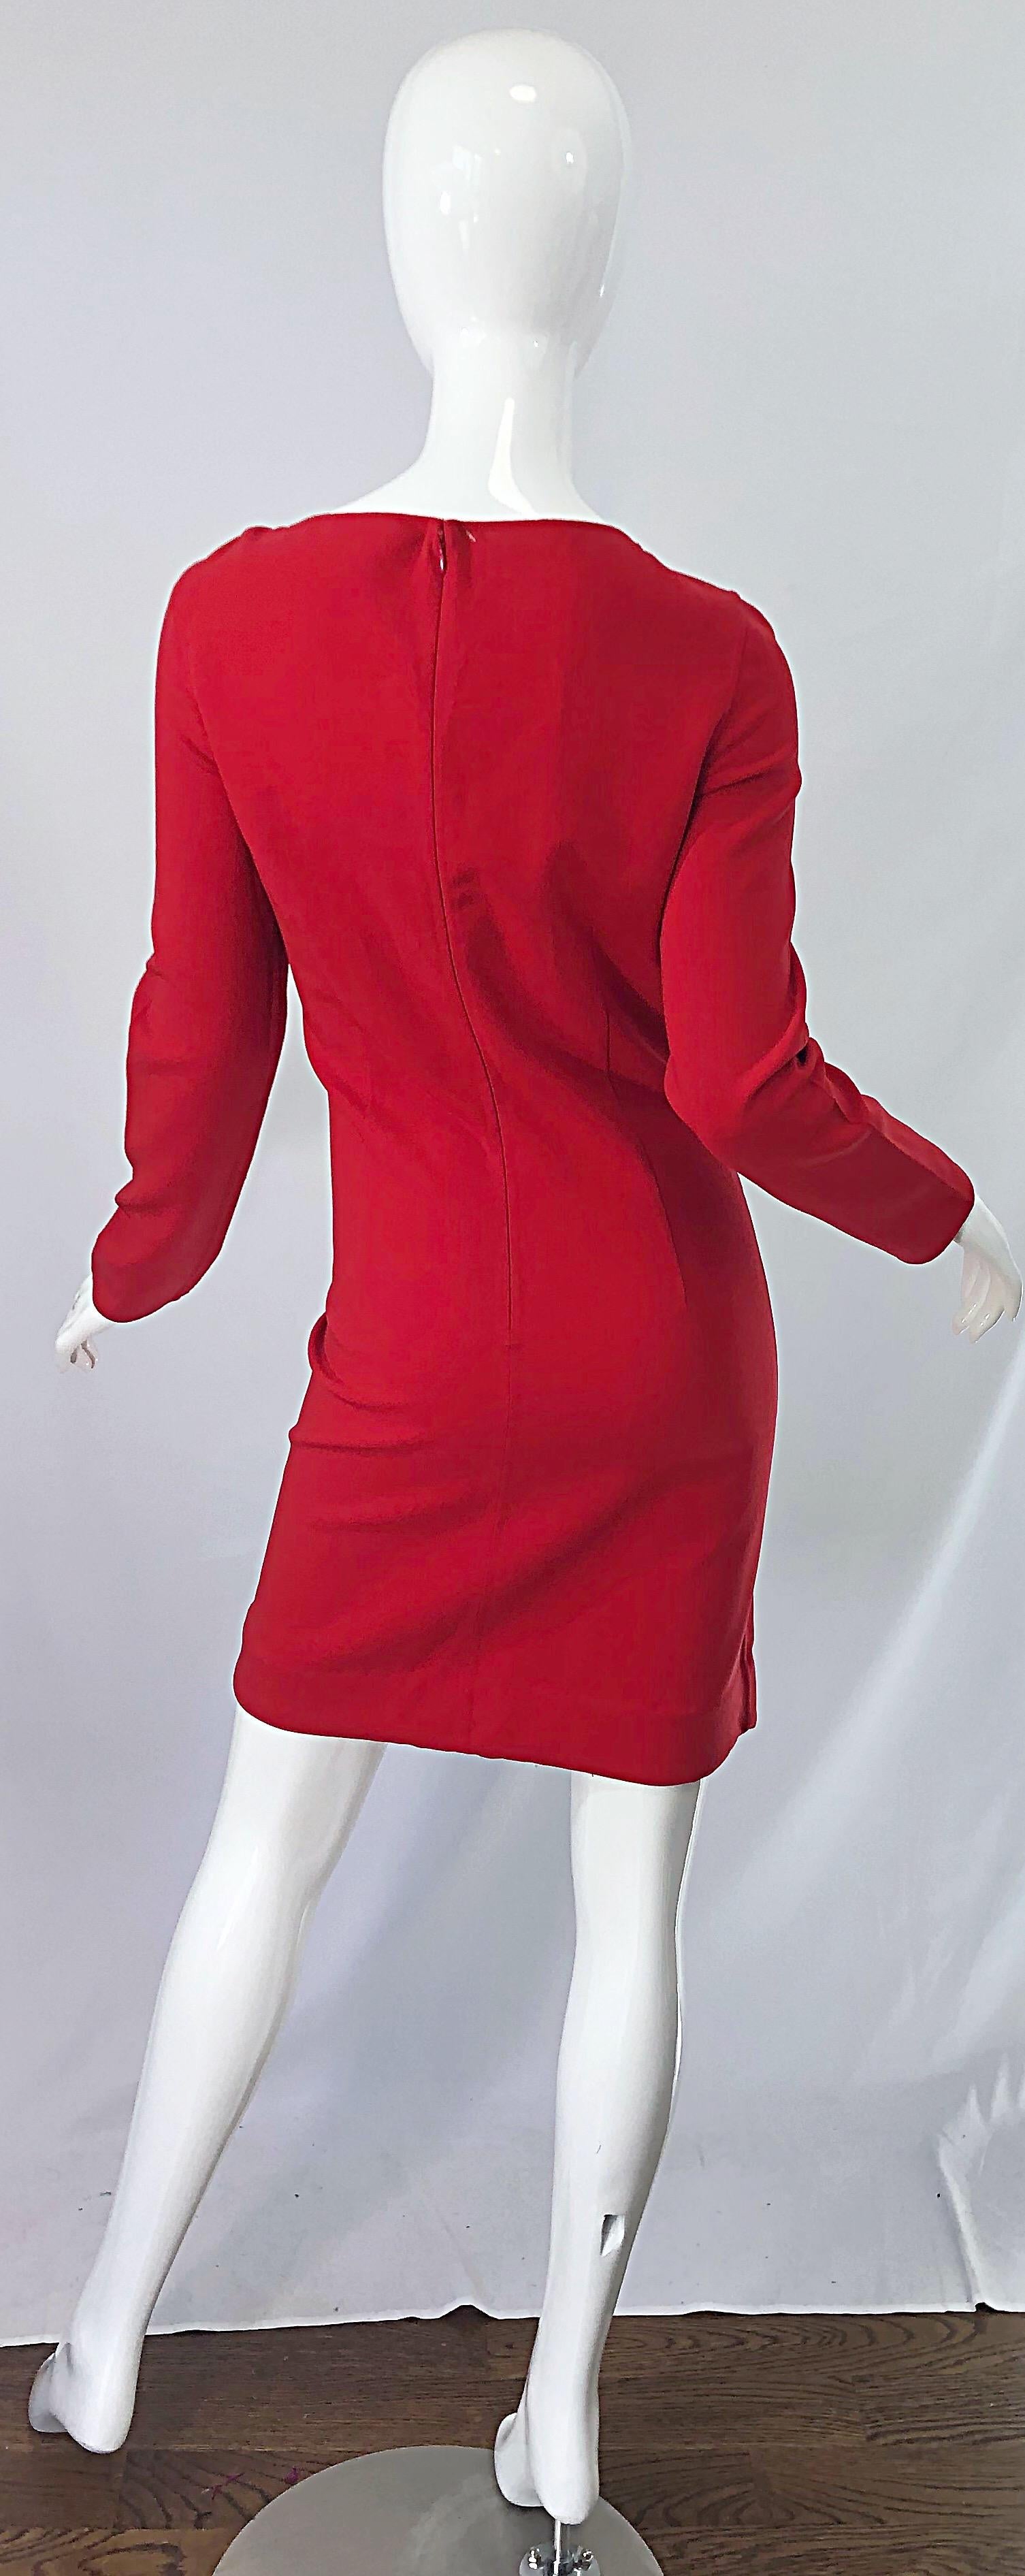 2000s red dress